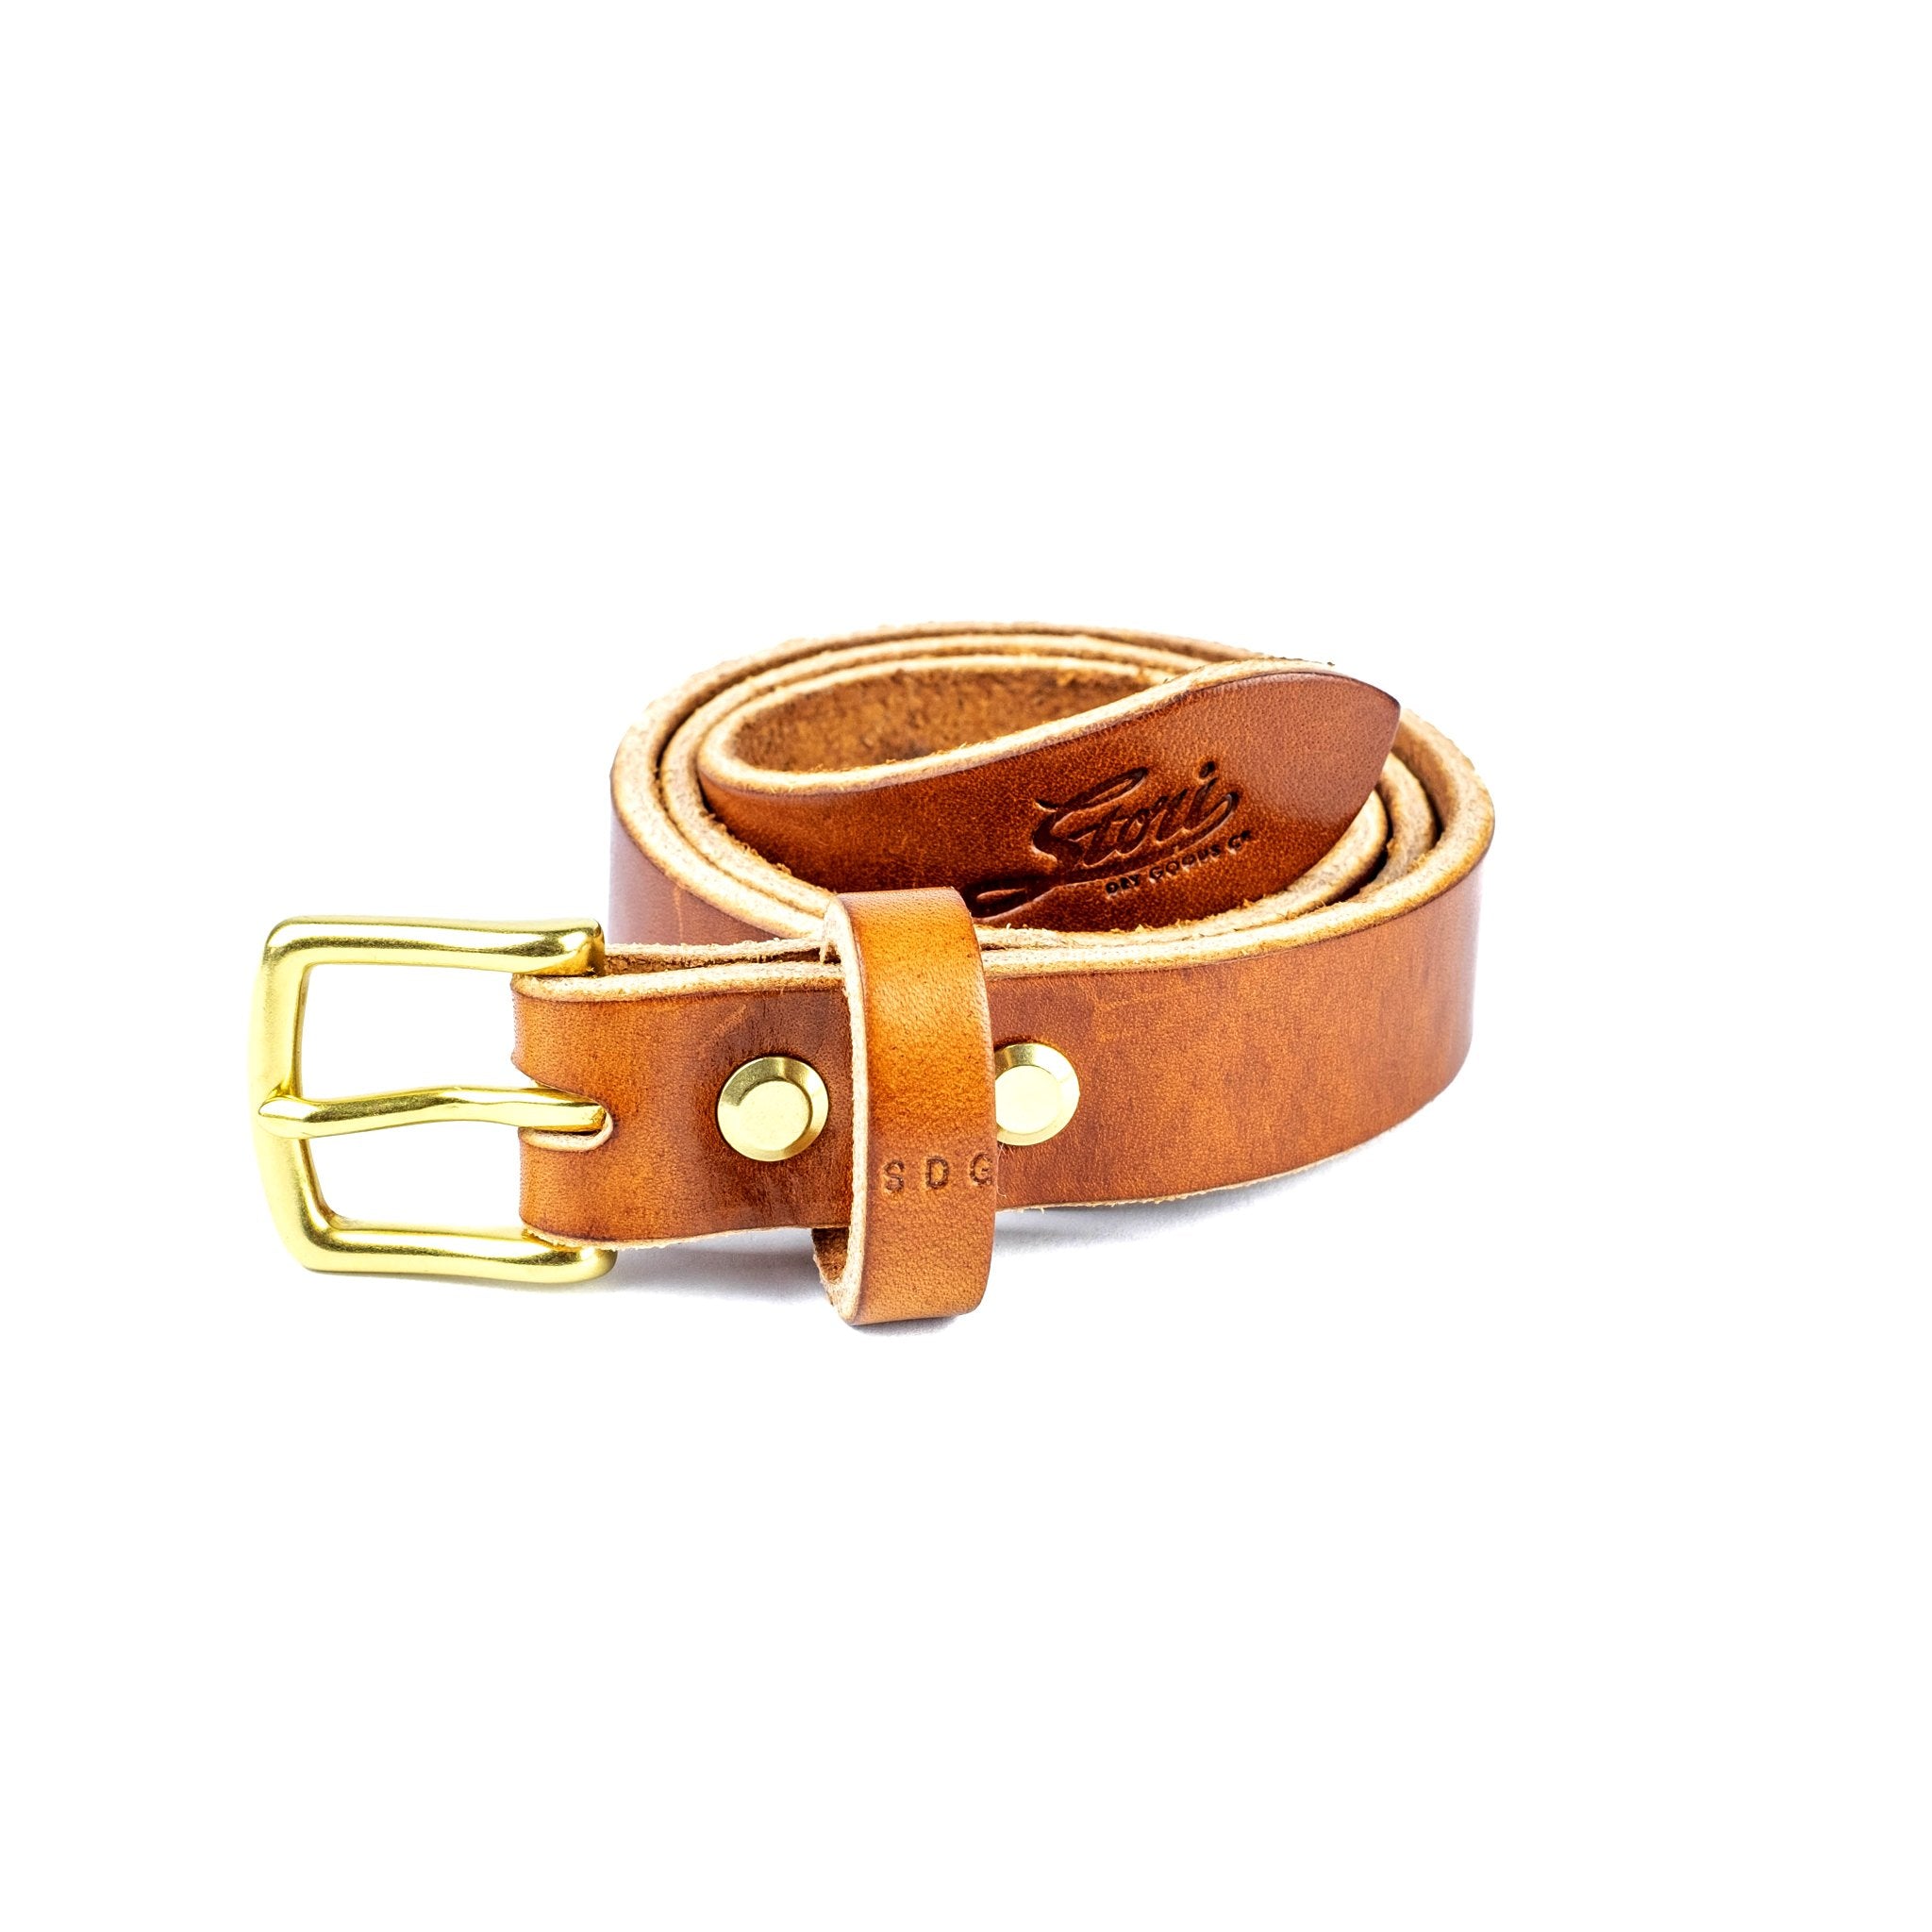 Ory leather belt